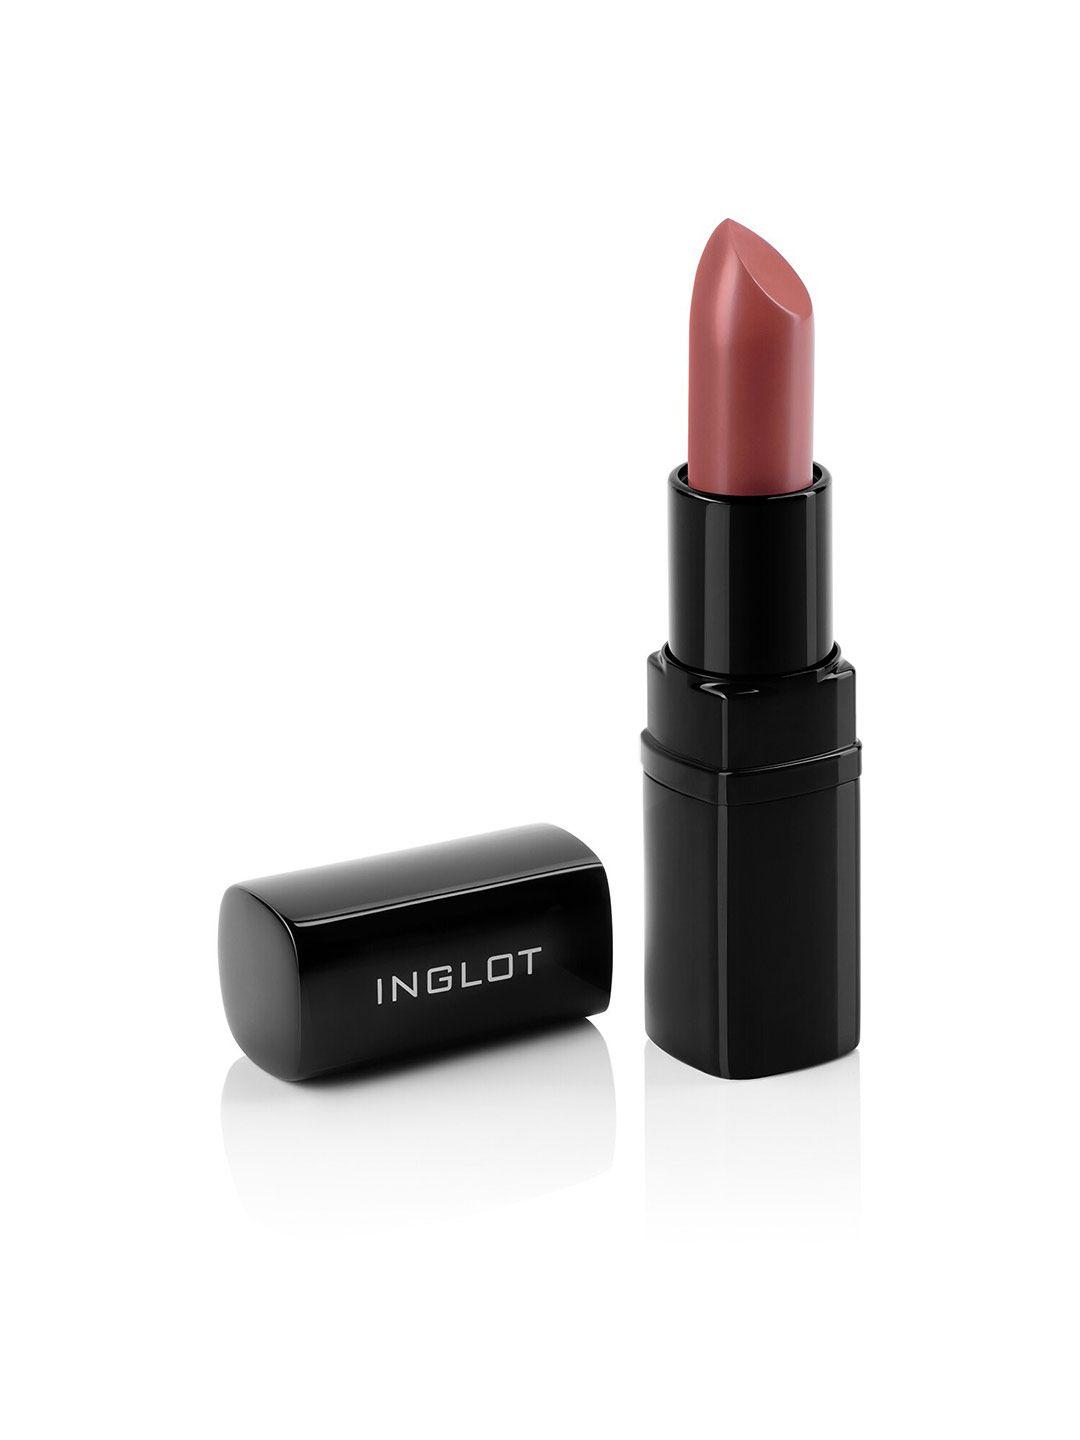 inglot creamy matte lipstick enriched with vitamin e - 445 - 4.5g